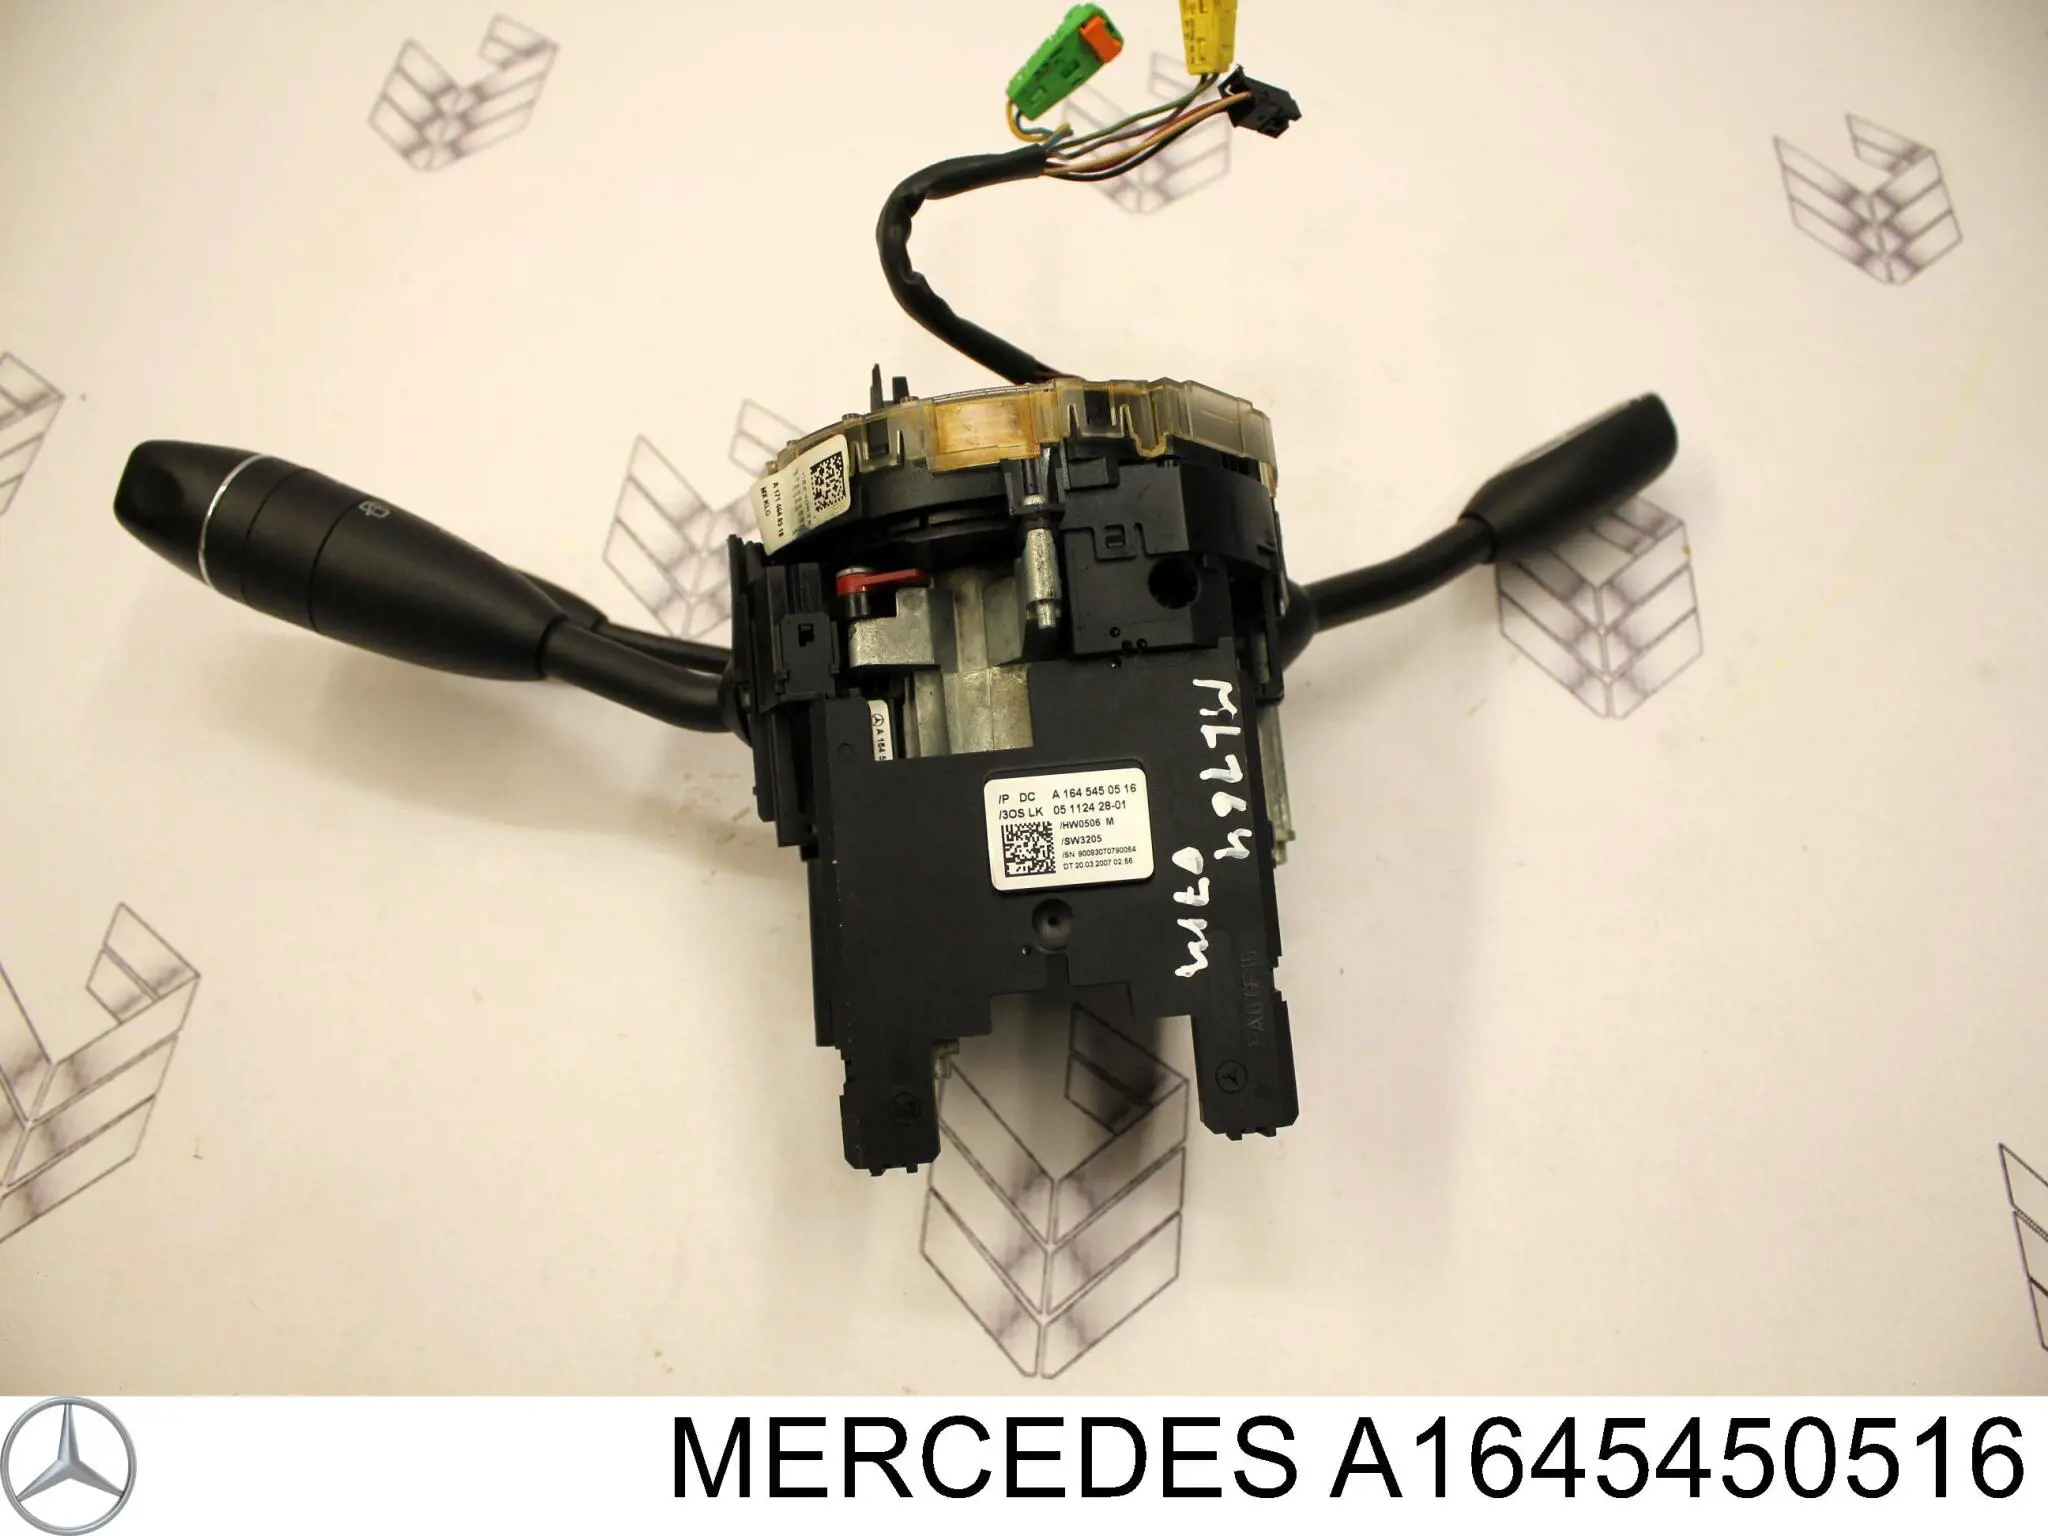 A1645450516 Mercedes датчик угла поворота рулевого колеса